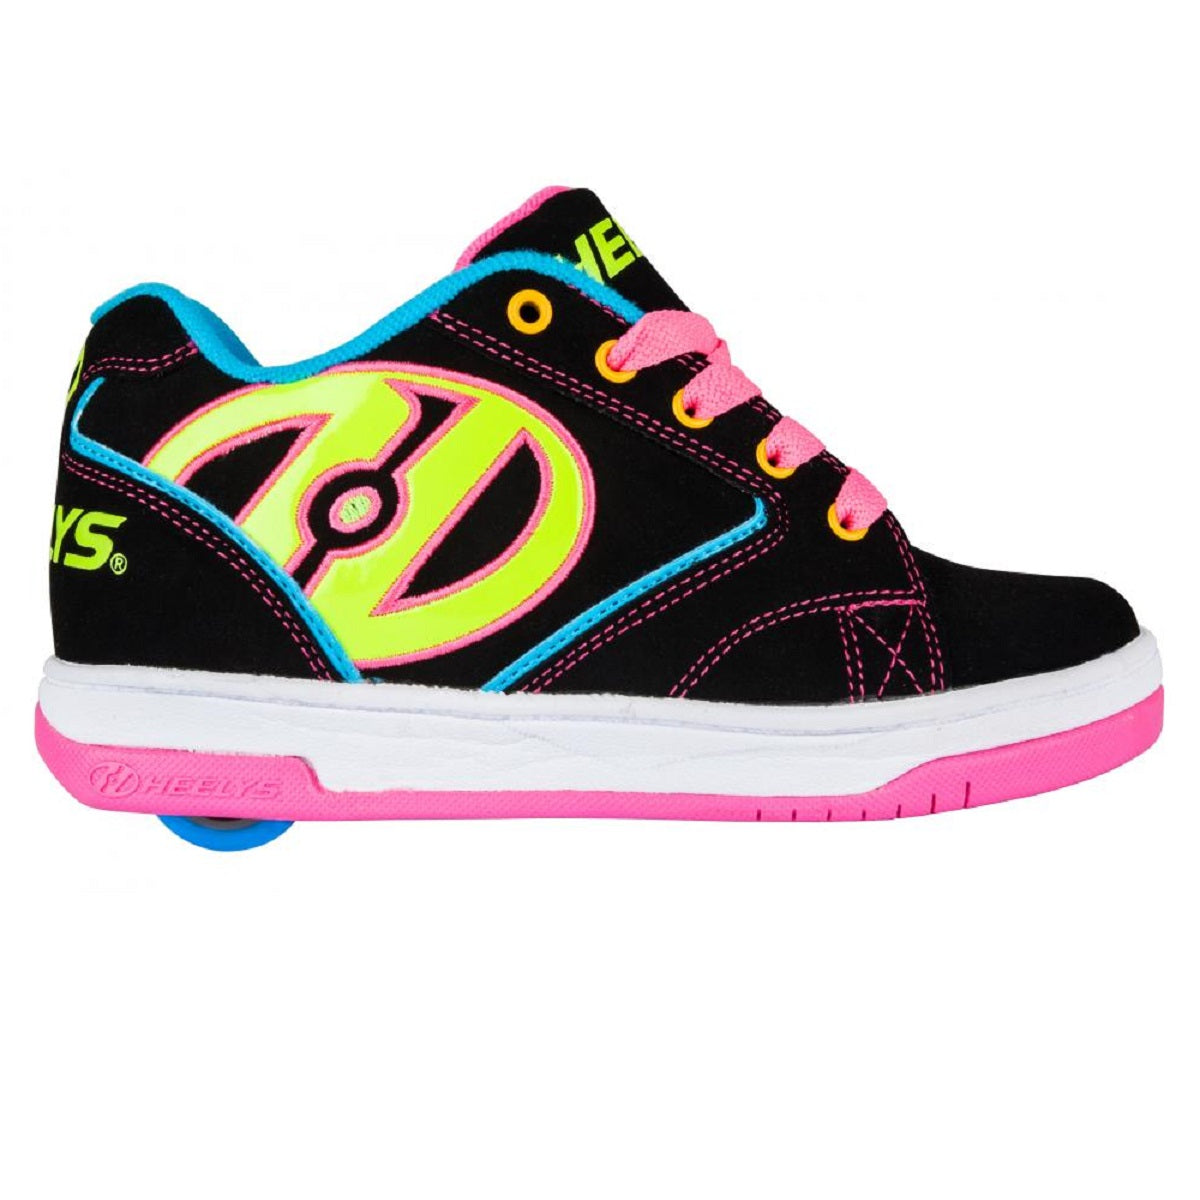 Heelys Propel 2.0 Girls Roller Shoes Black/Neon Multi